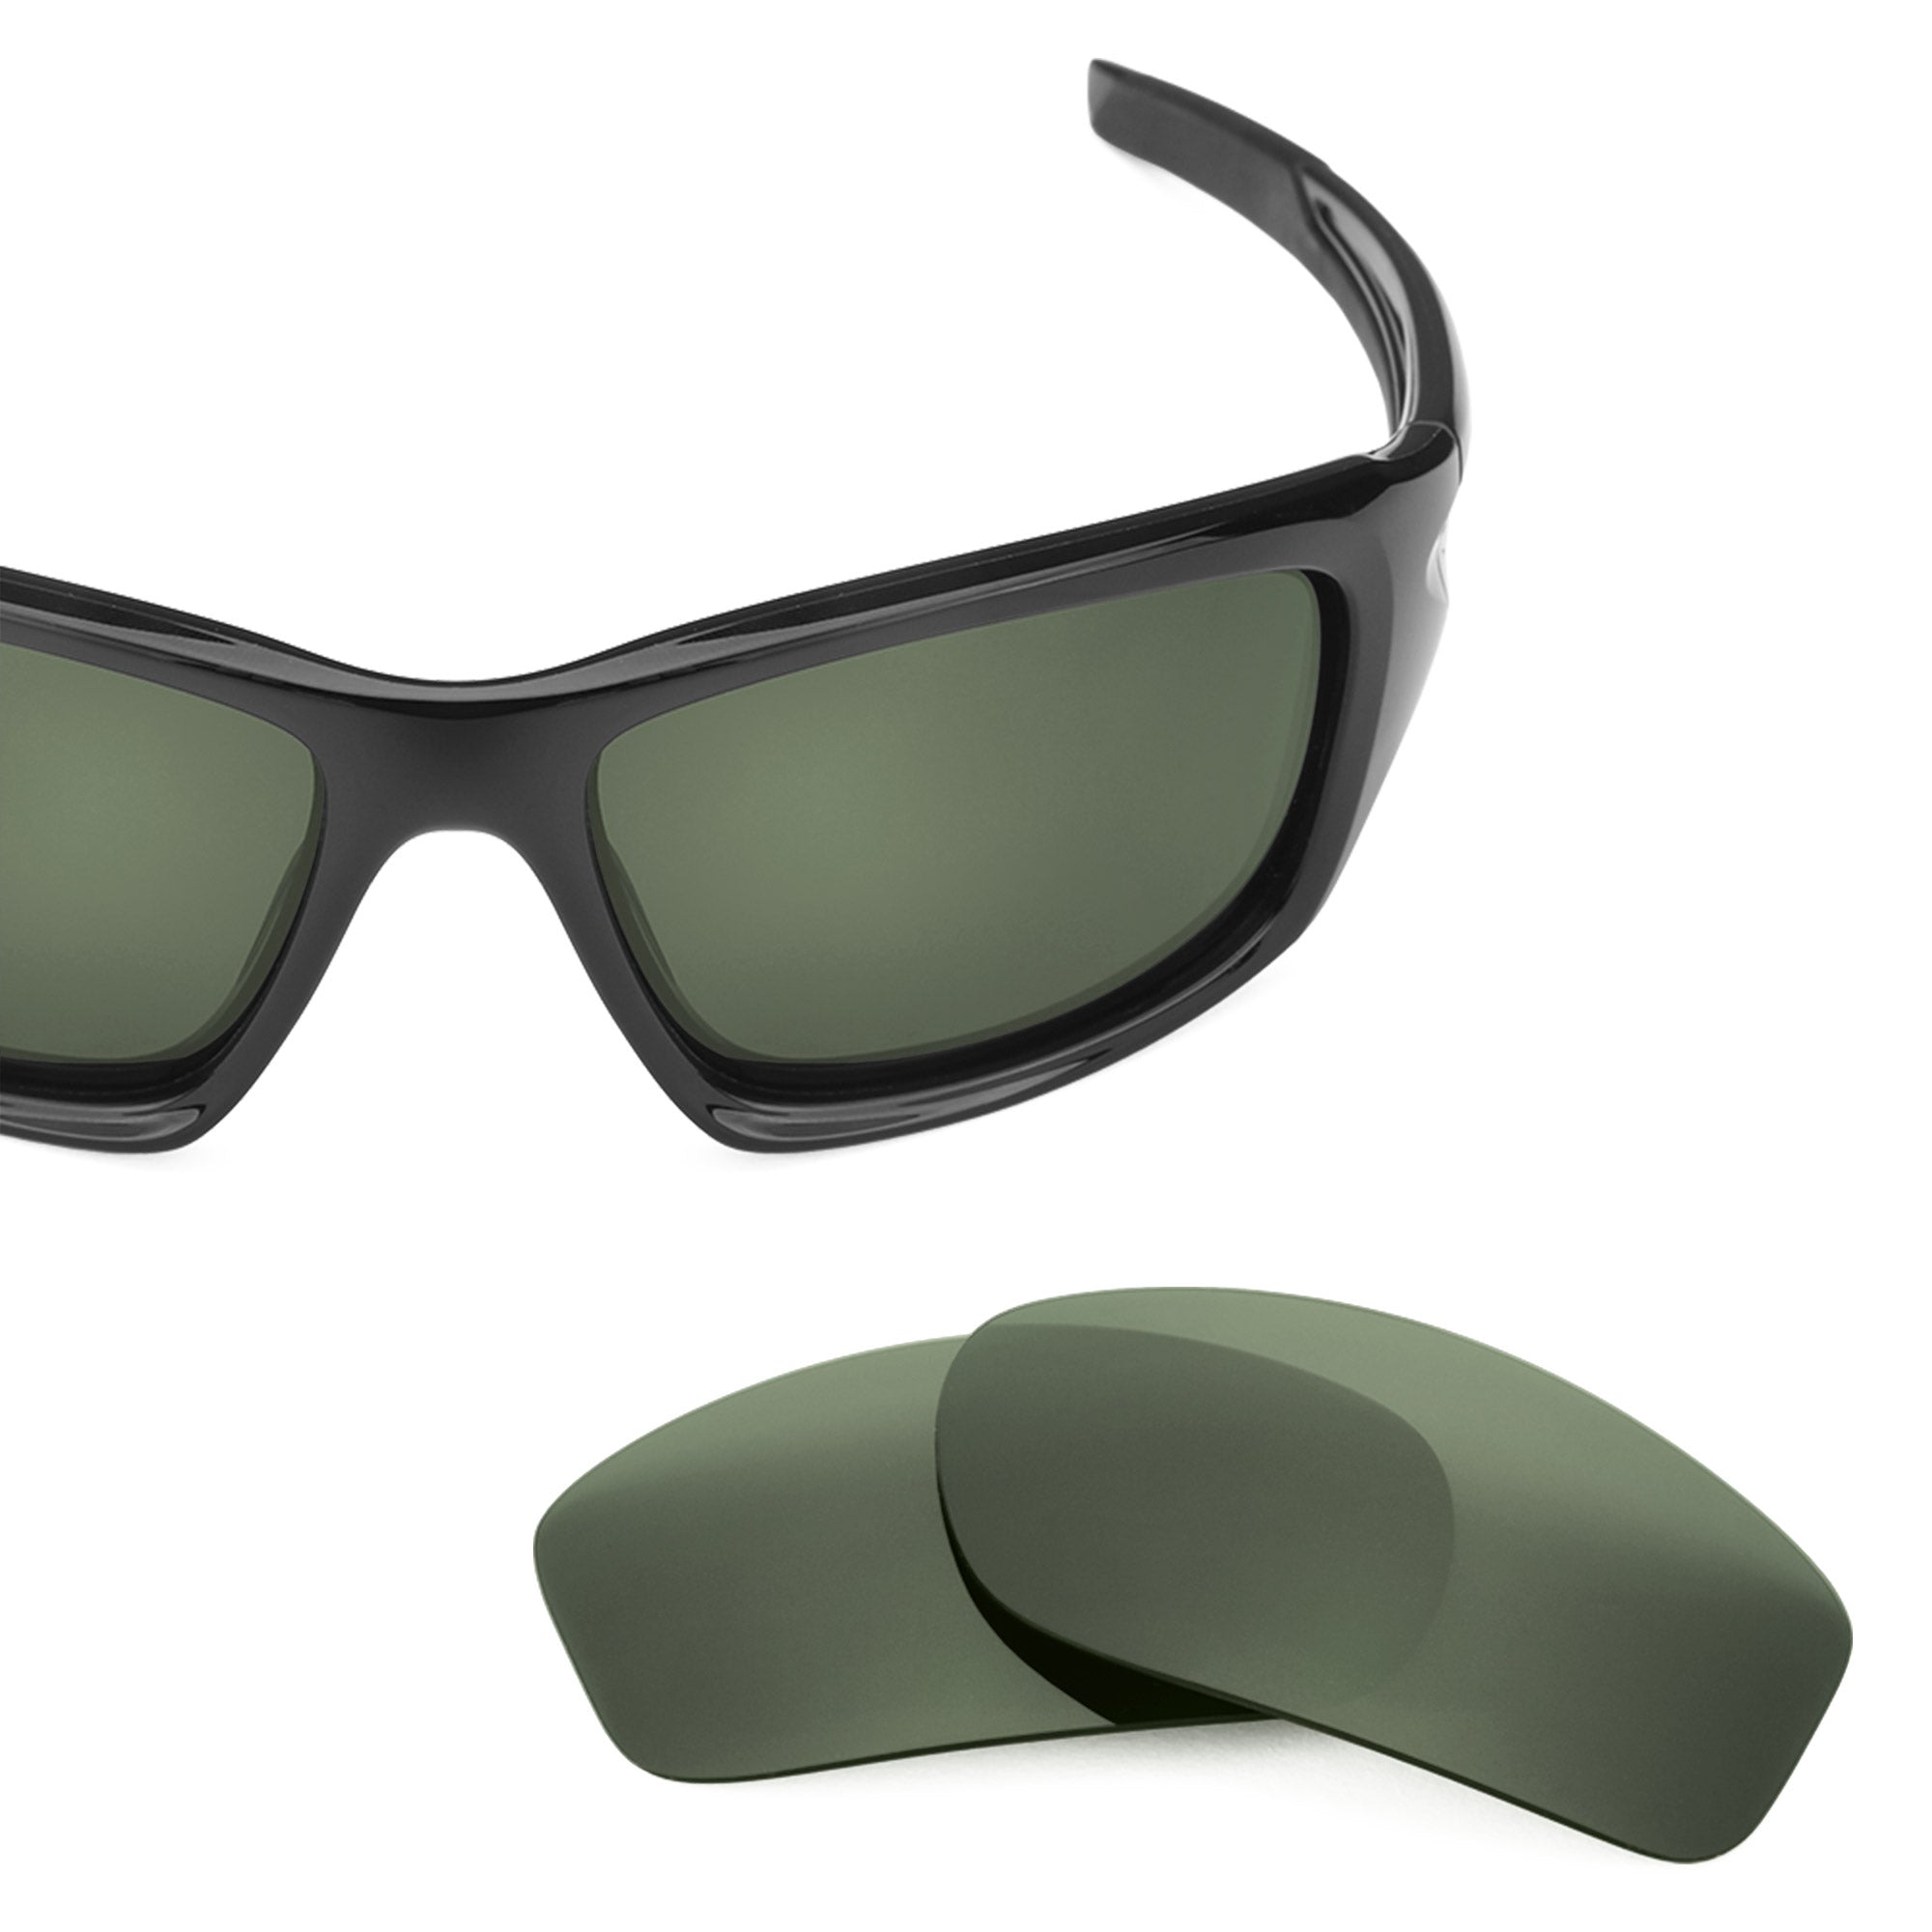 Oakley Valve Elite Polarized Gray Green Replacement Lenses - by Revant Optics